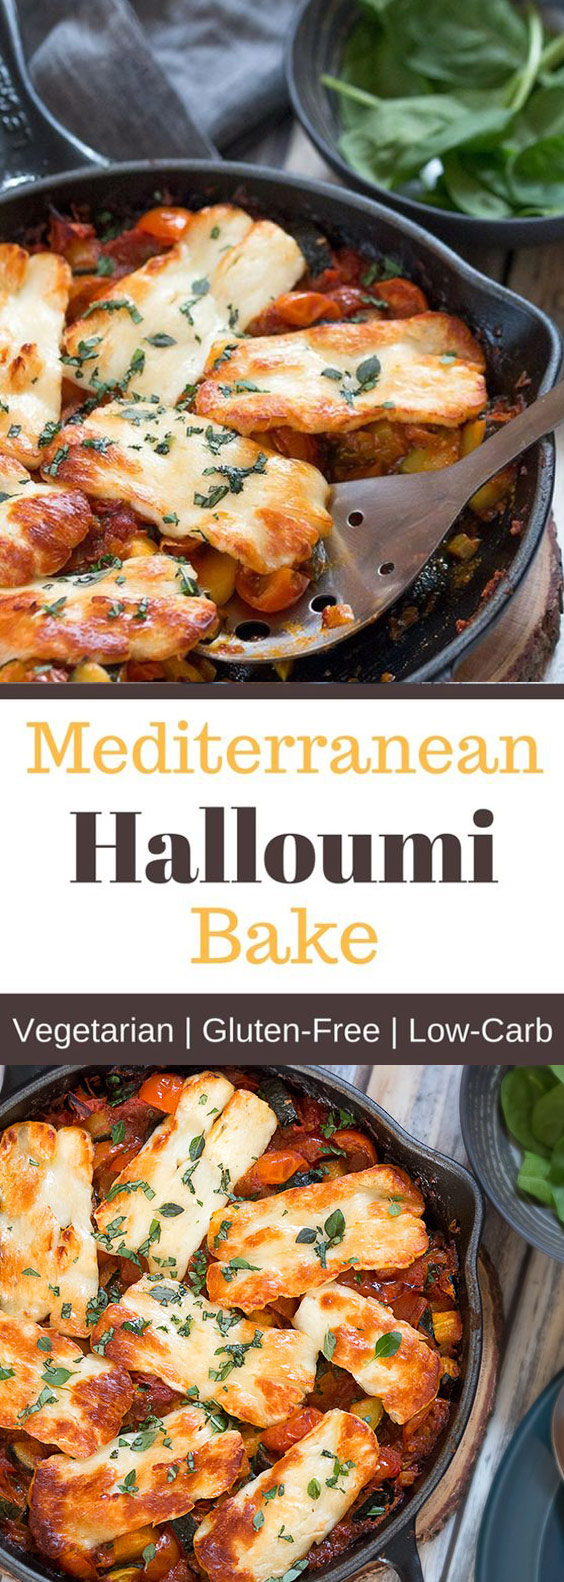 Mediterranean Halloumi Bake